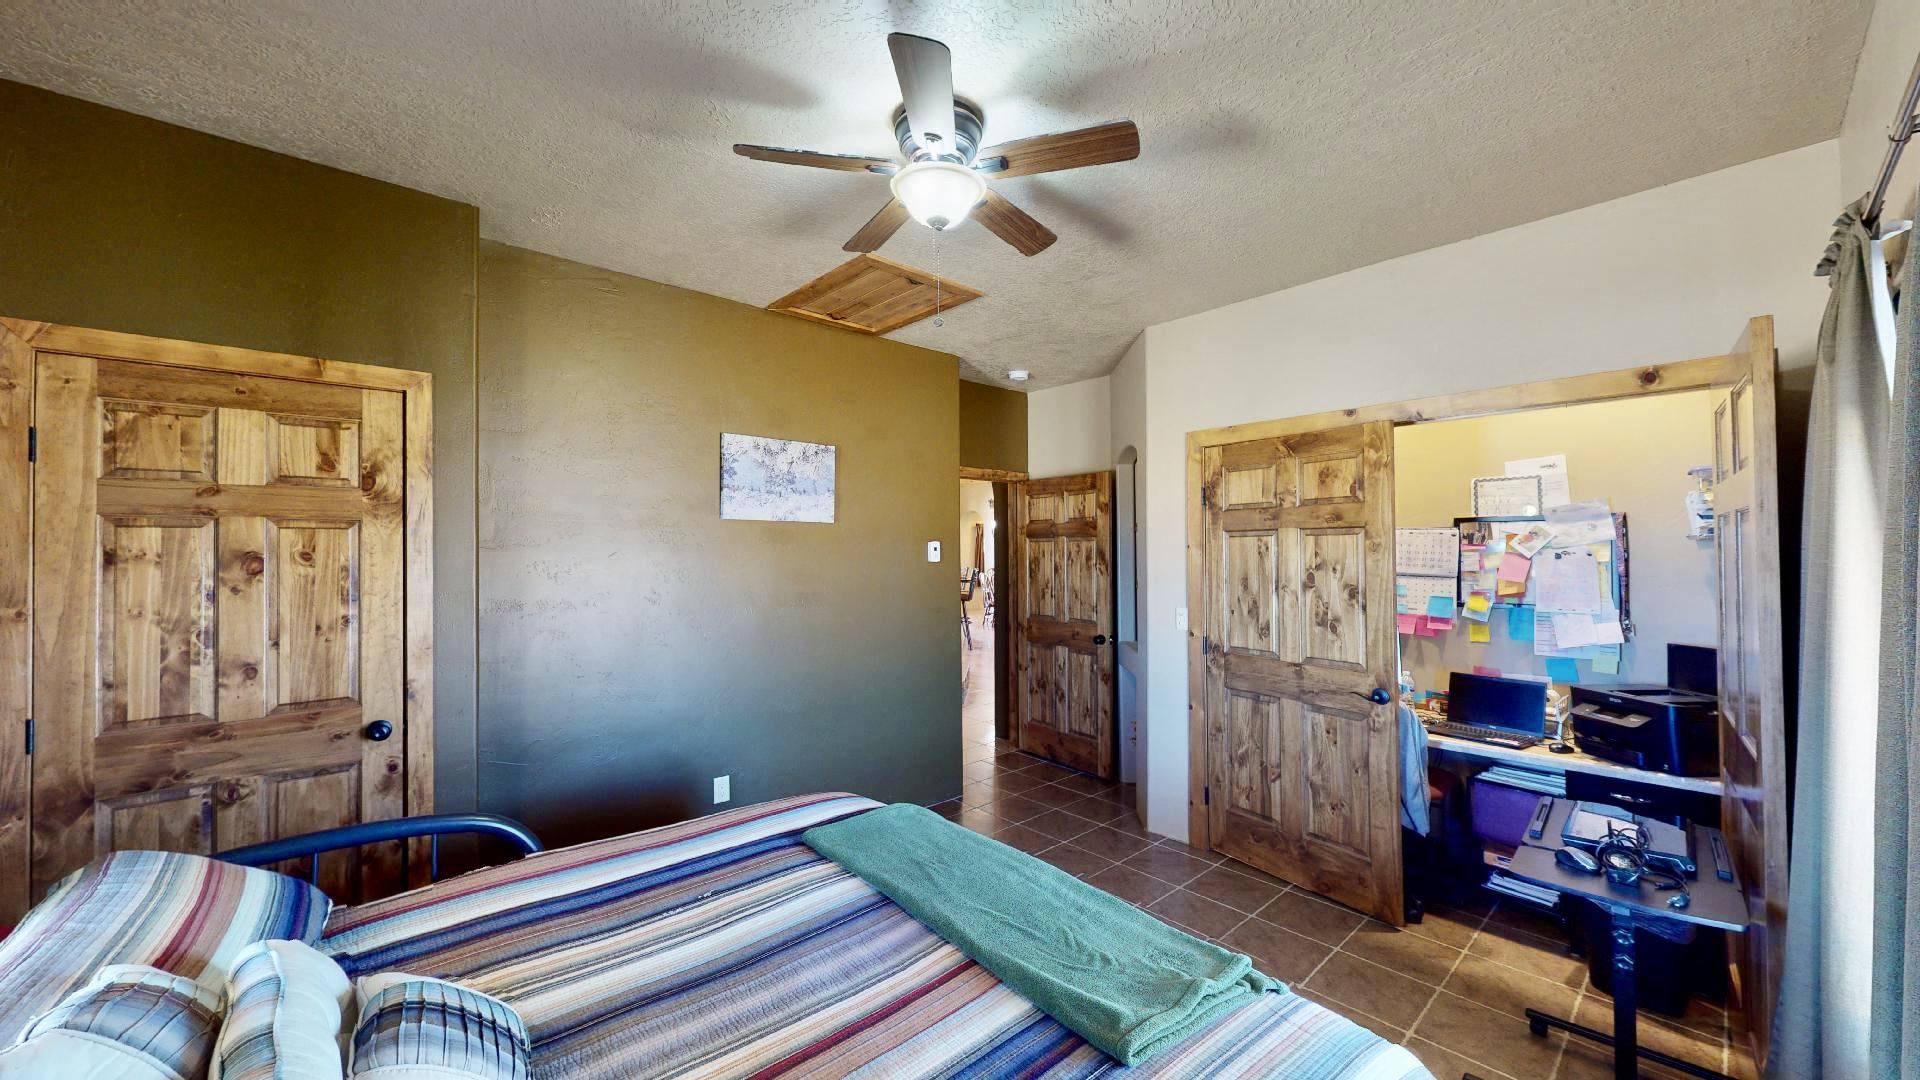 86 James Valley Road, Ramah, New Mexico 87321, 3 Bedrooms Bedrooms, ,4 BathroomsBathrooms,Farm,For Sale,86 James Valley Road,202101730